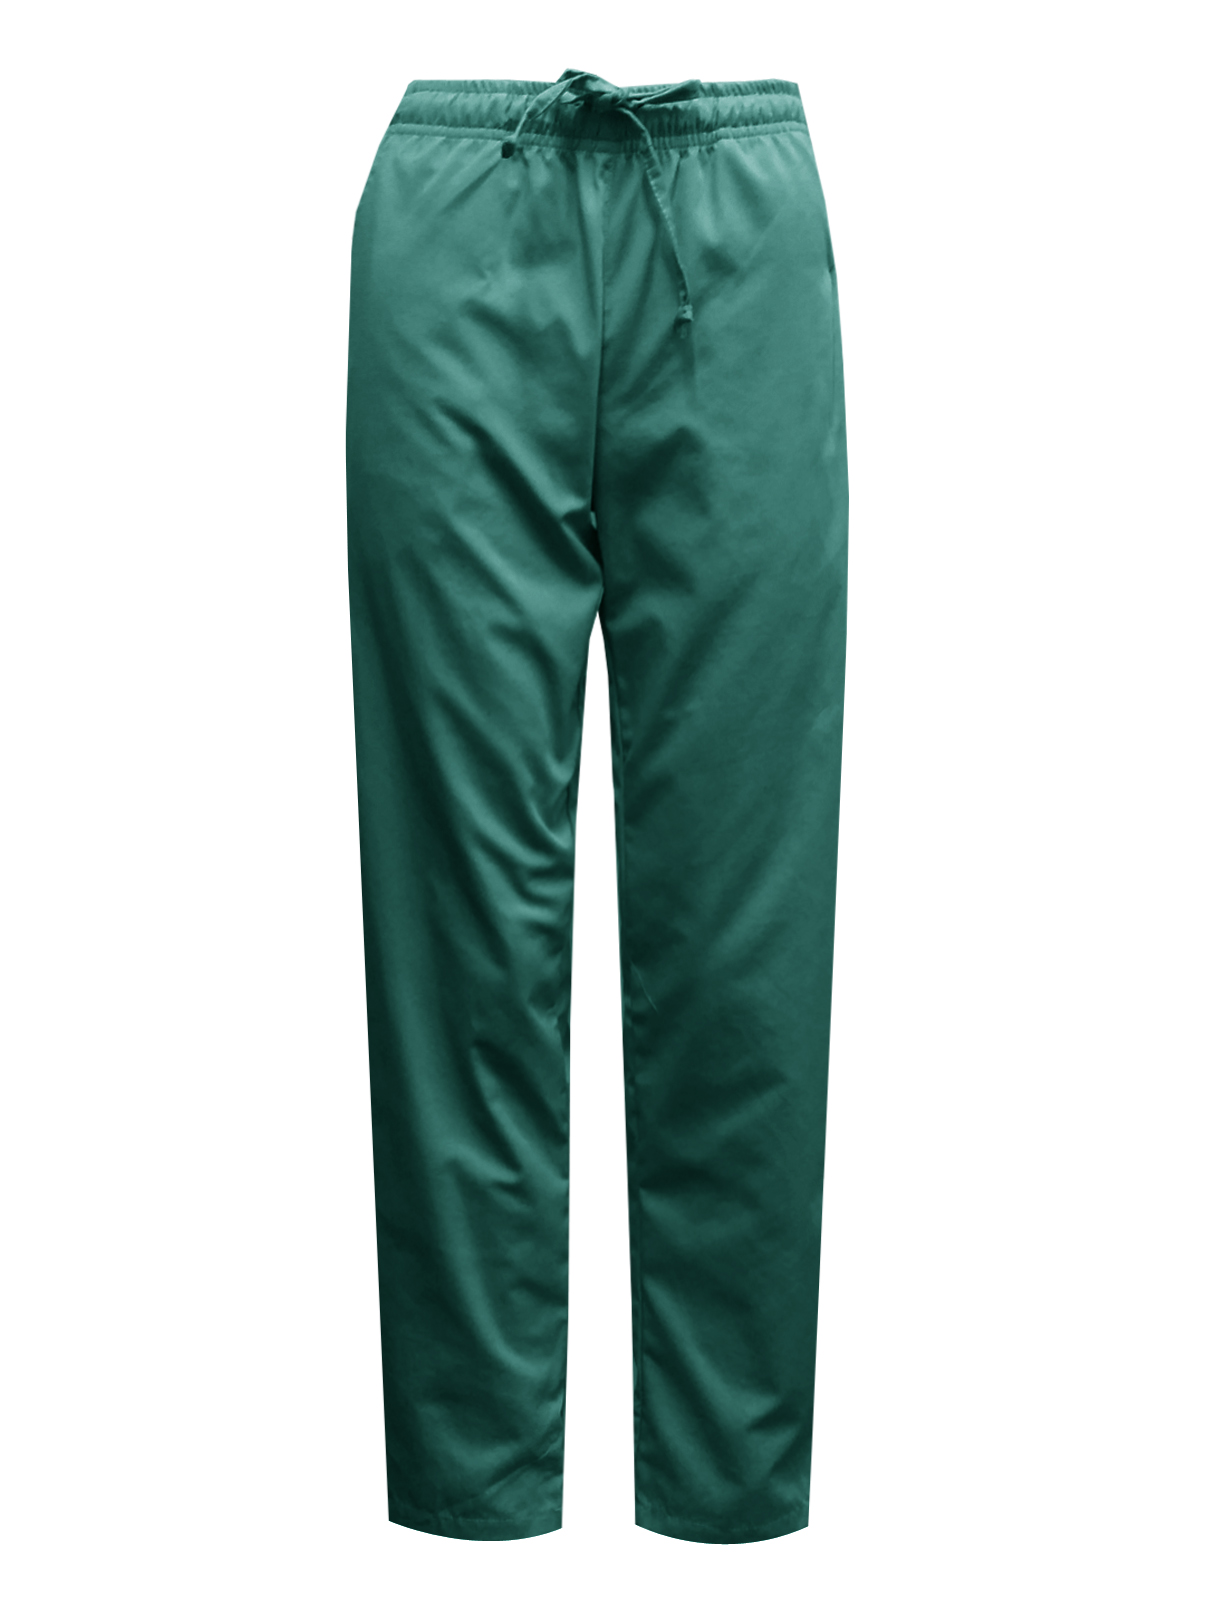 BKMDS09P – Hunter Green Scrub Pants – Uniform Online